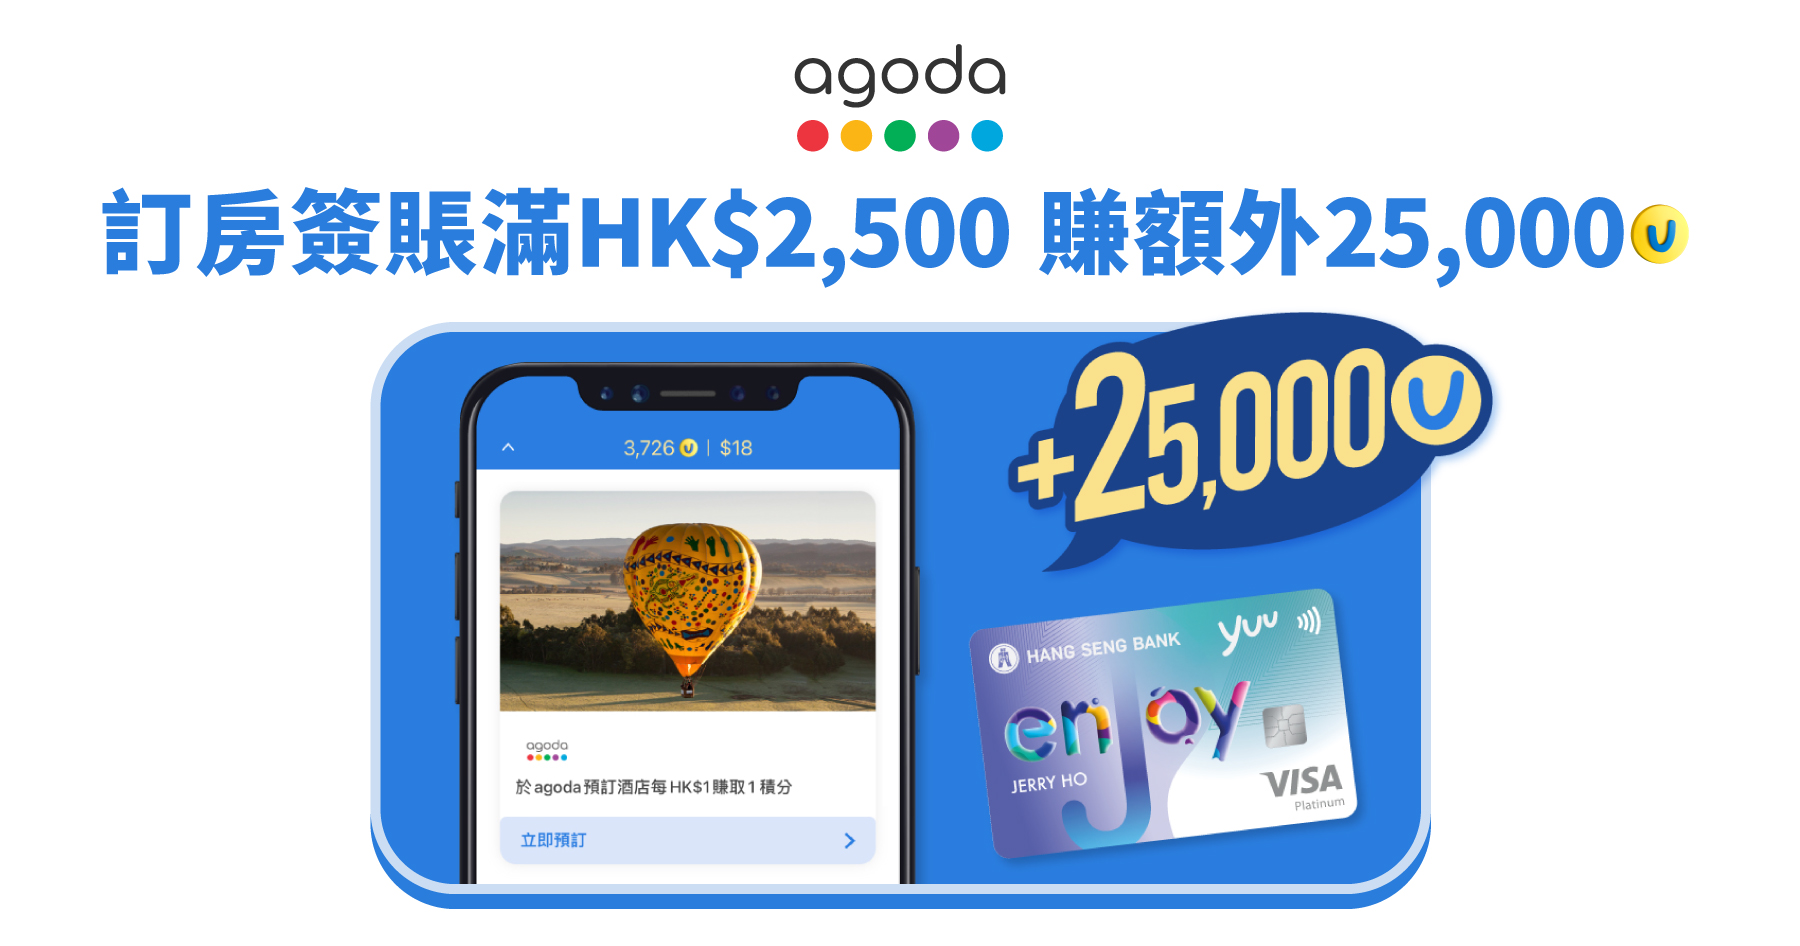 agoda訂房簽賬滿HK$2,500 賺額外25,000(u)